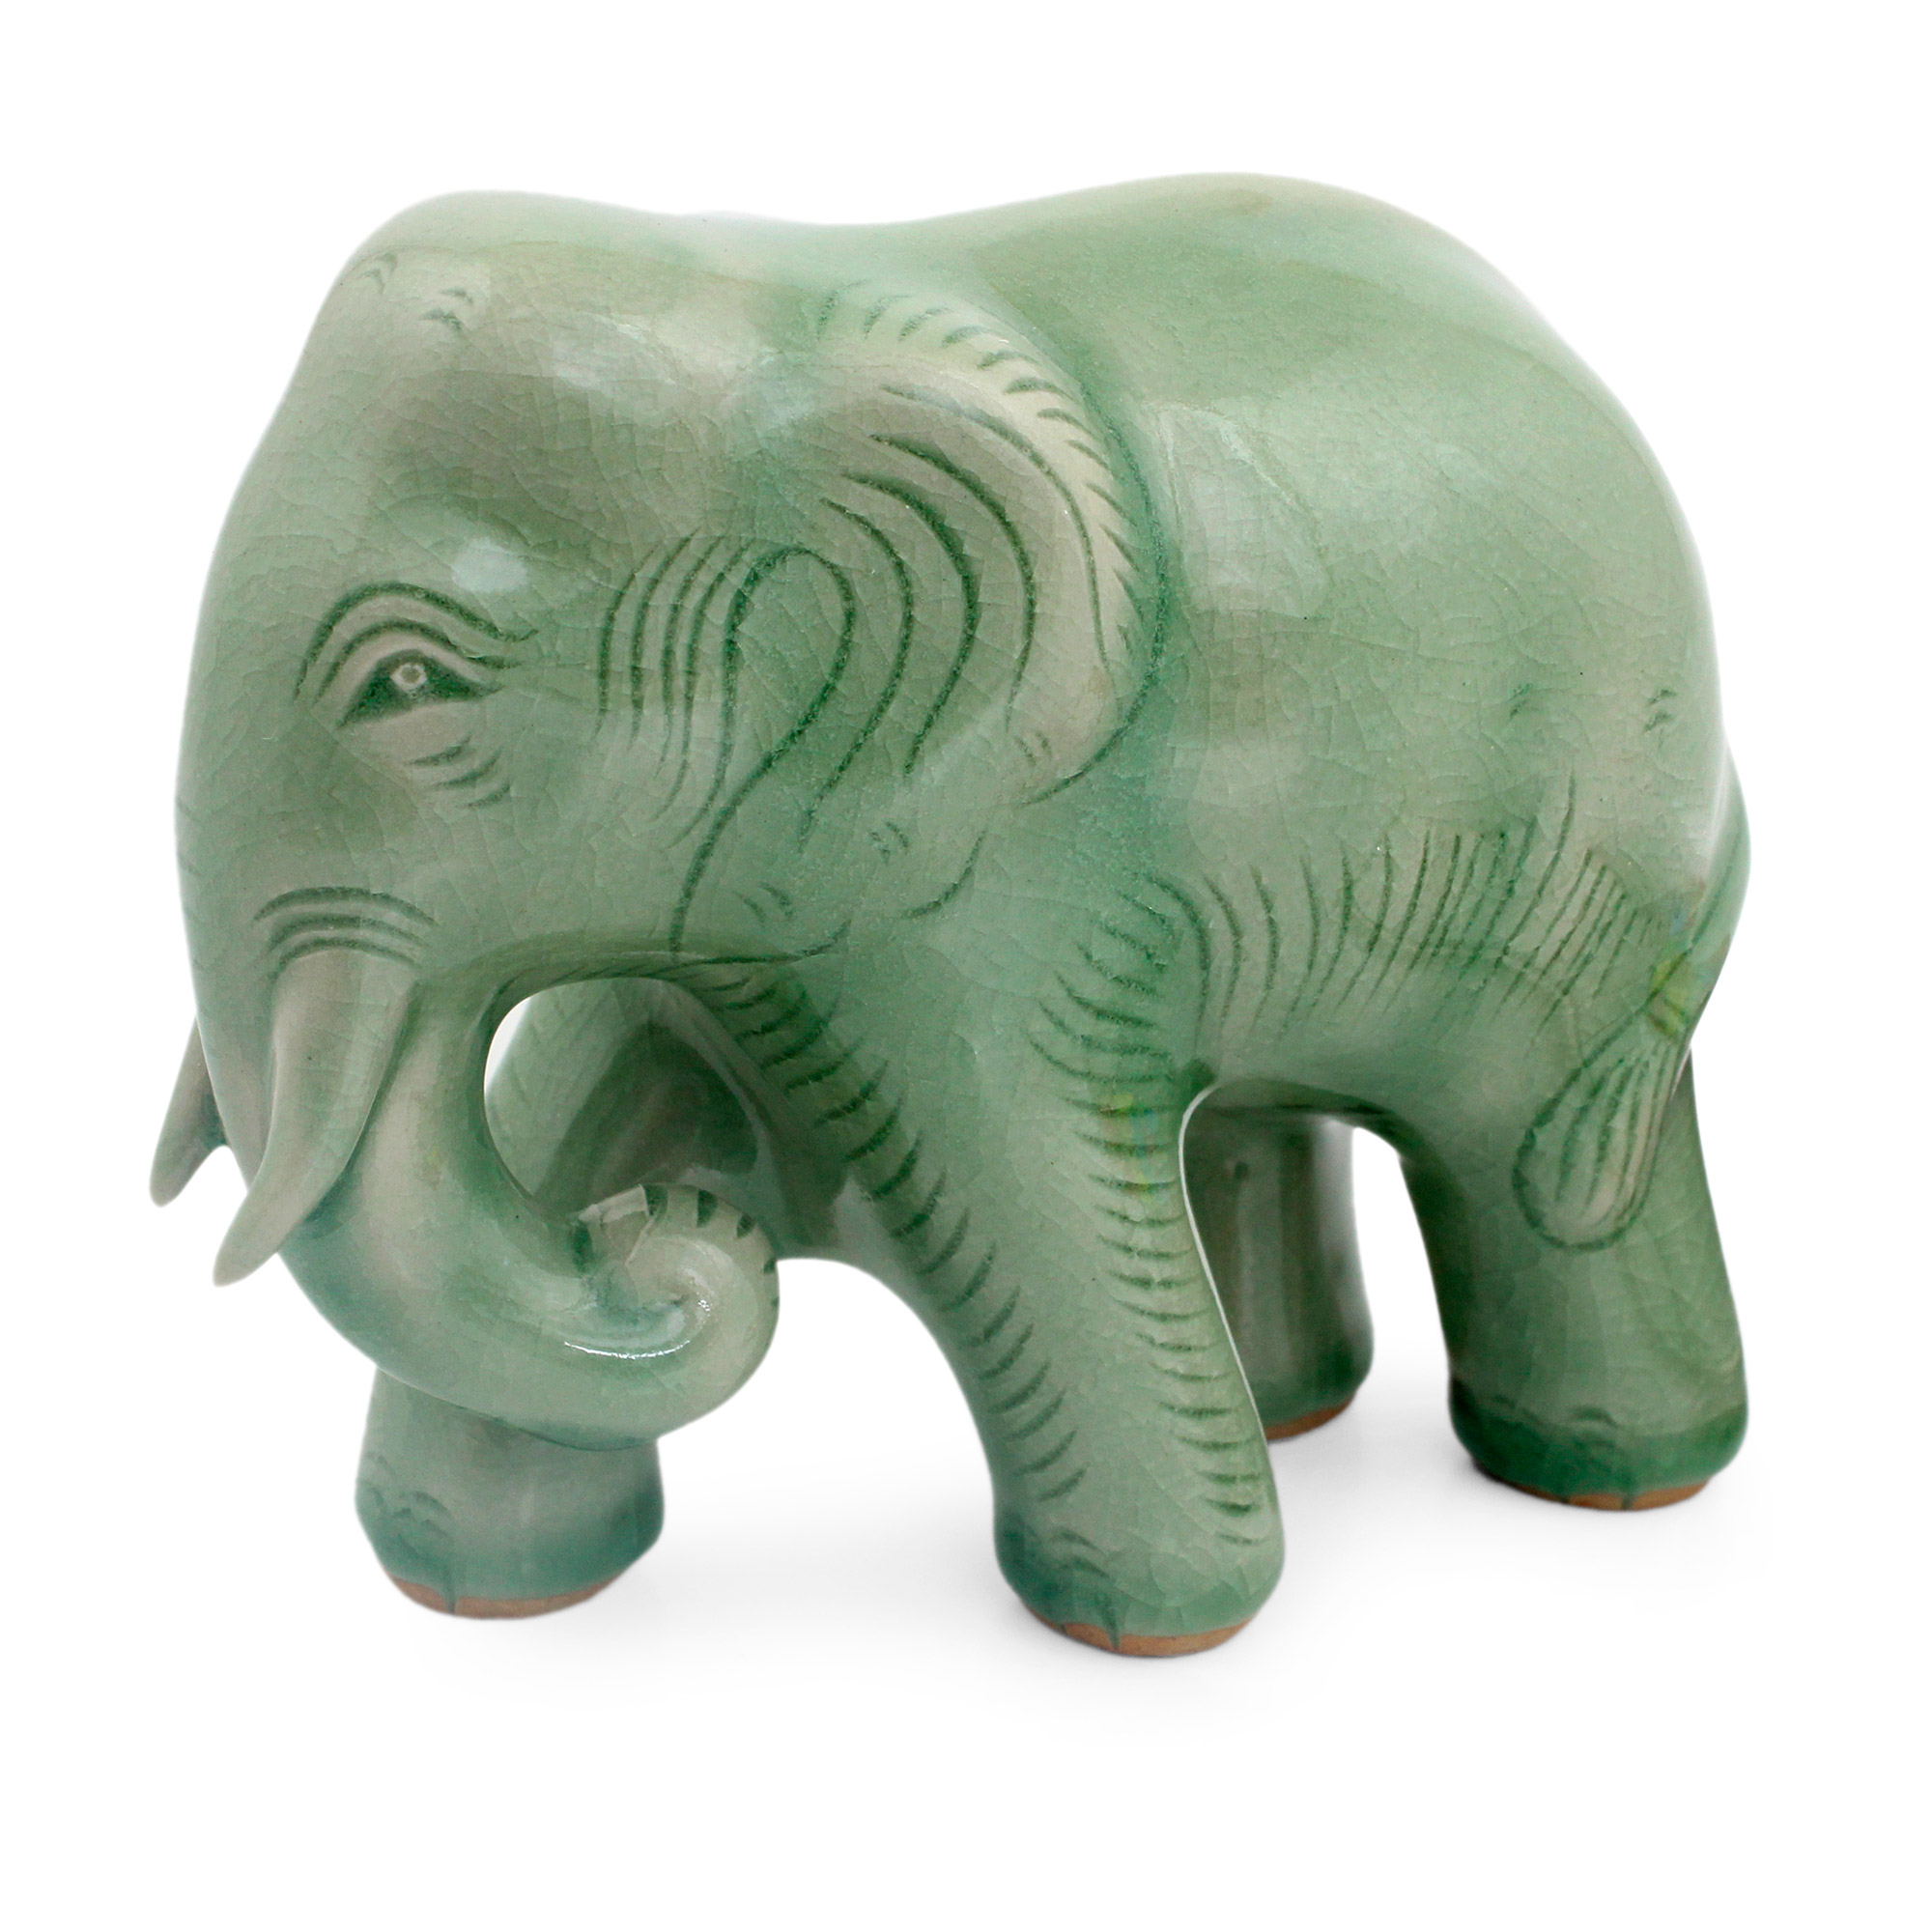 Celadon Ceramic Elephant Figurine by Thai Artisans - Purposeful ...